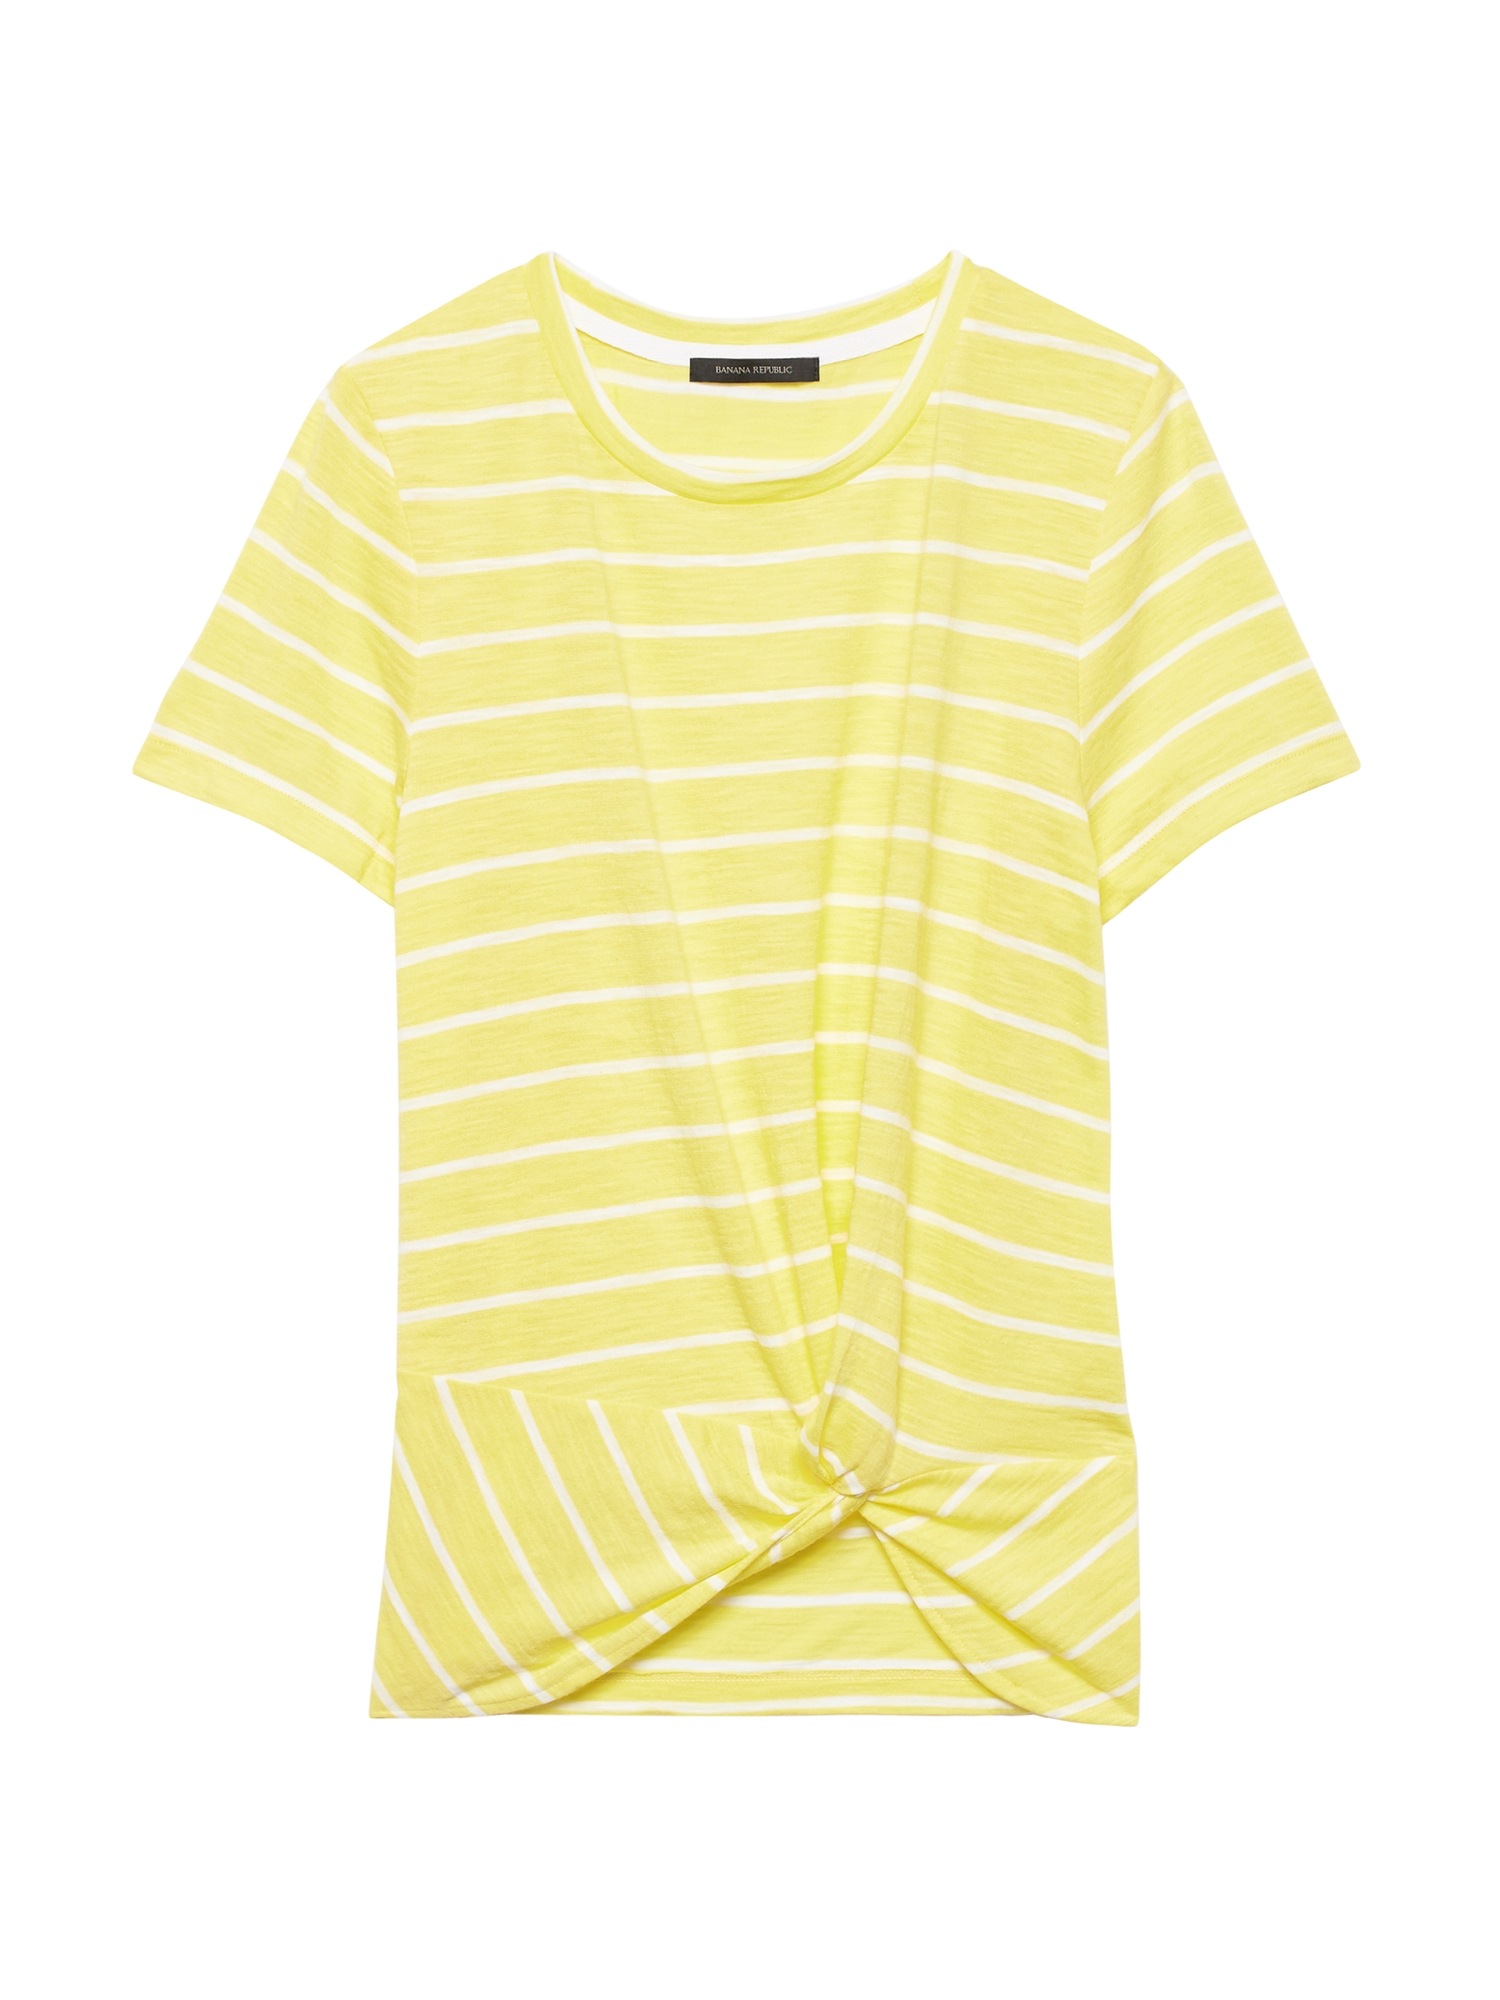 Slub Cotton-Modal Twist-Front T-Shirt